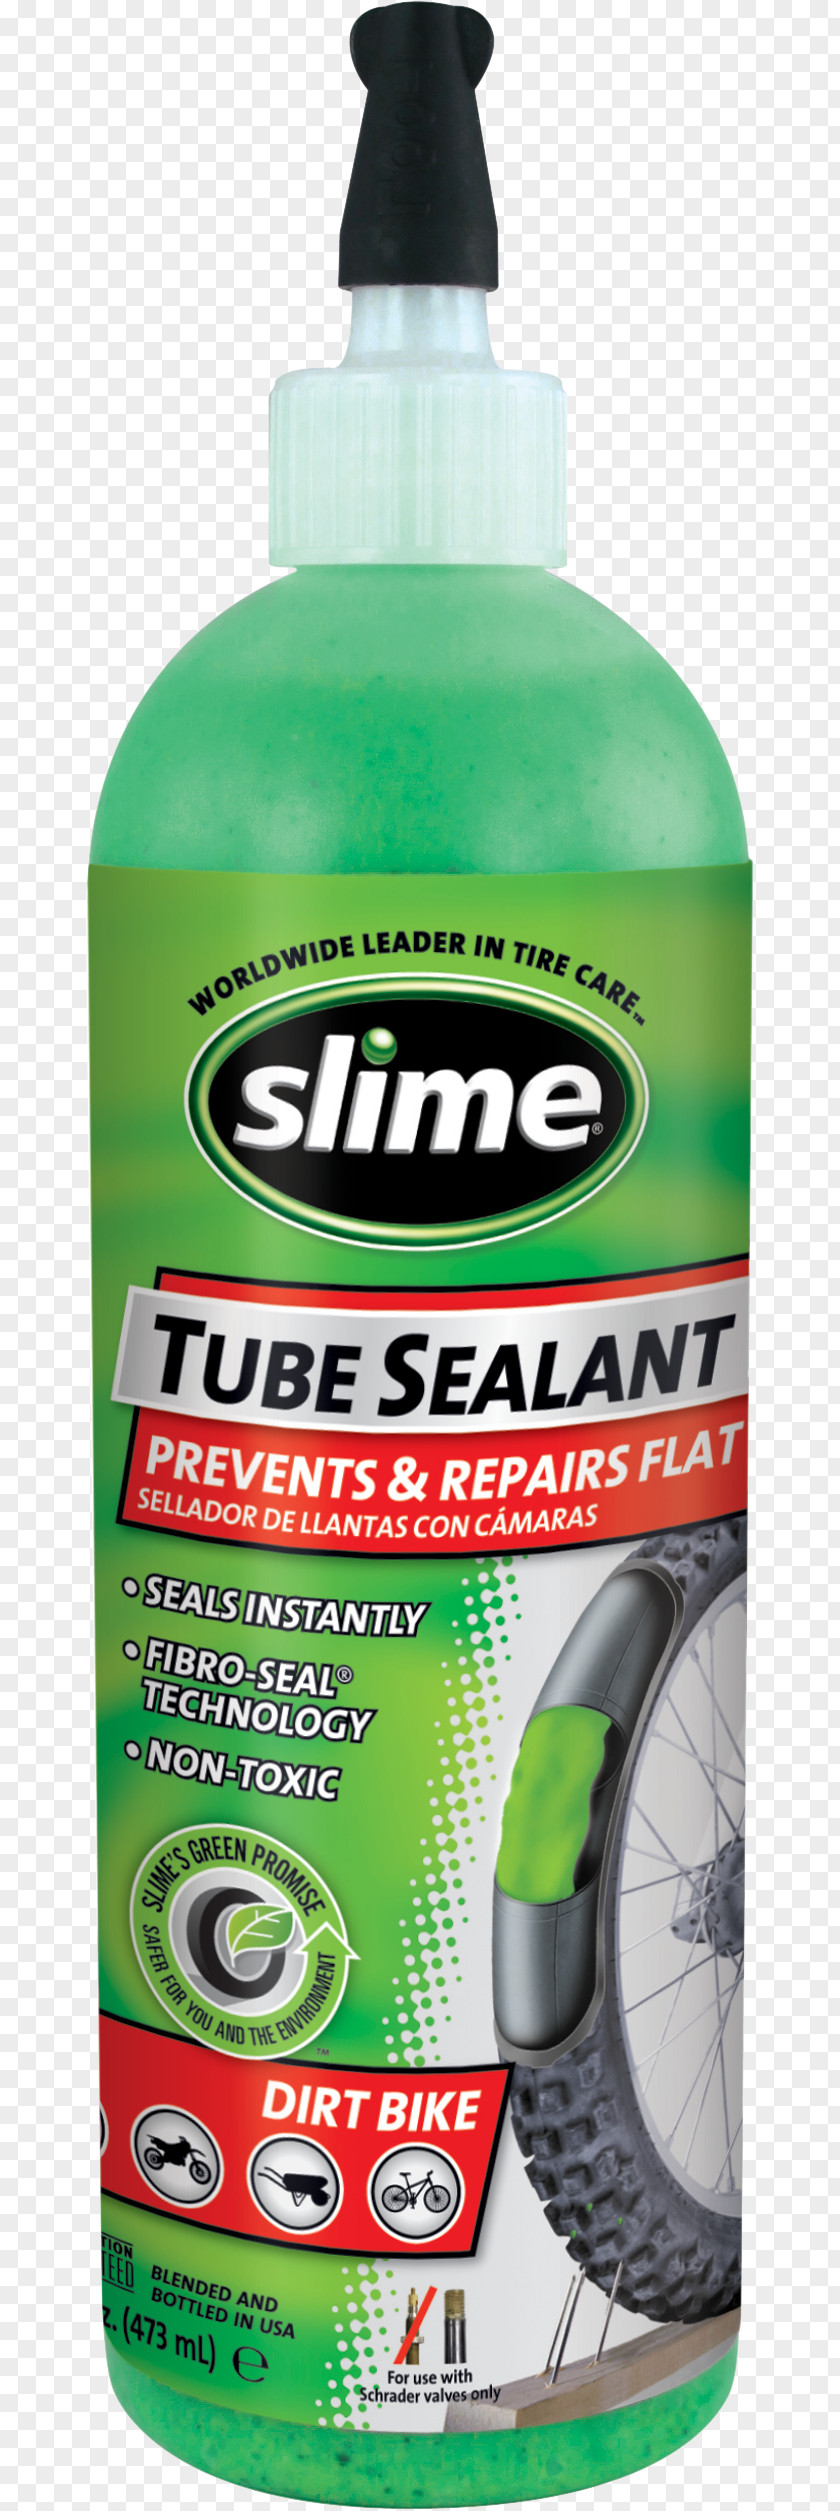 Car Tubeless Tire Slime Flat PNG